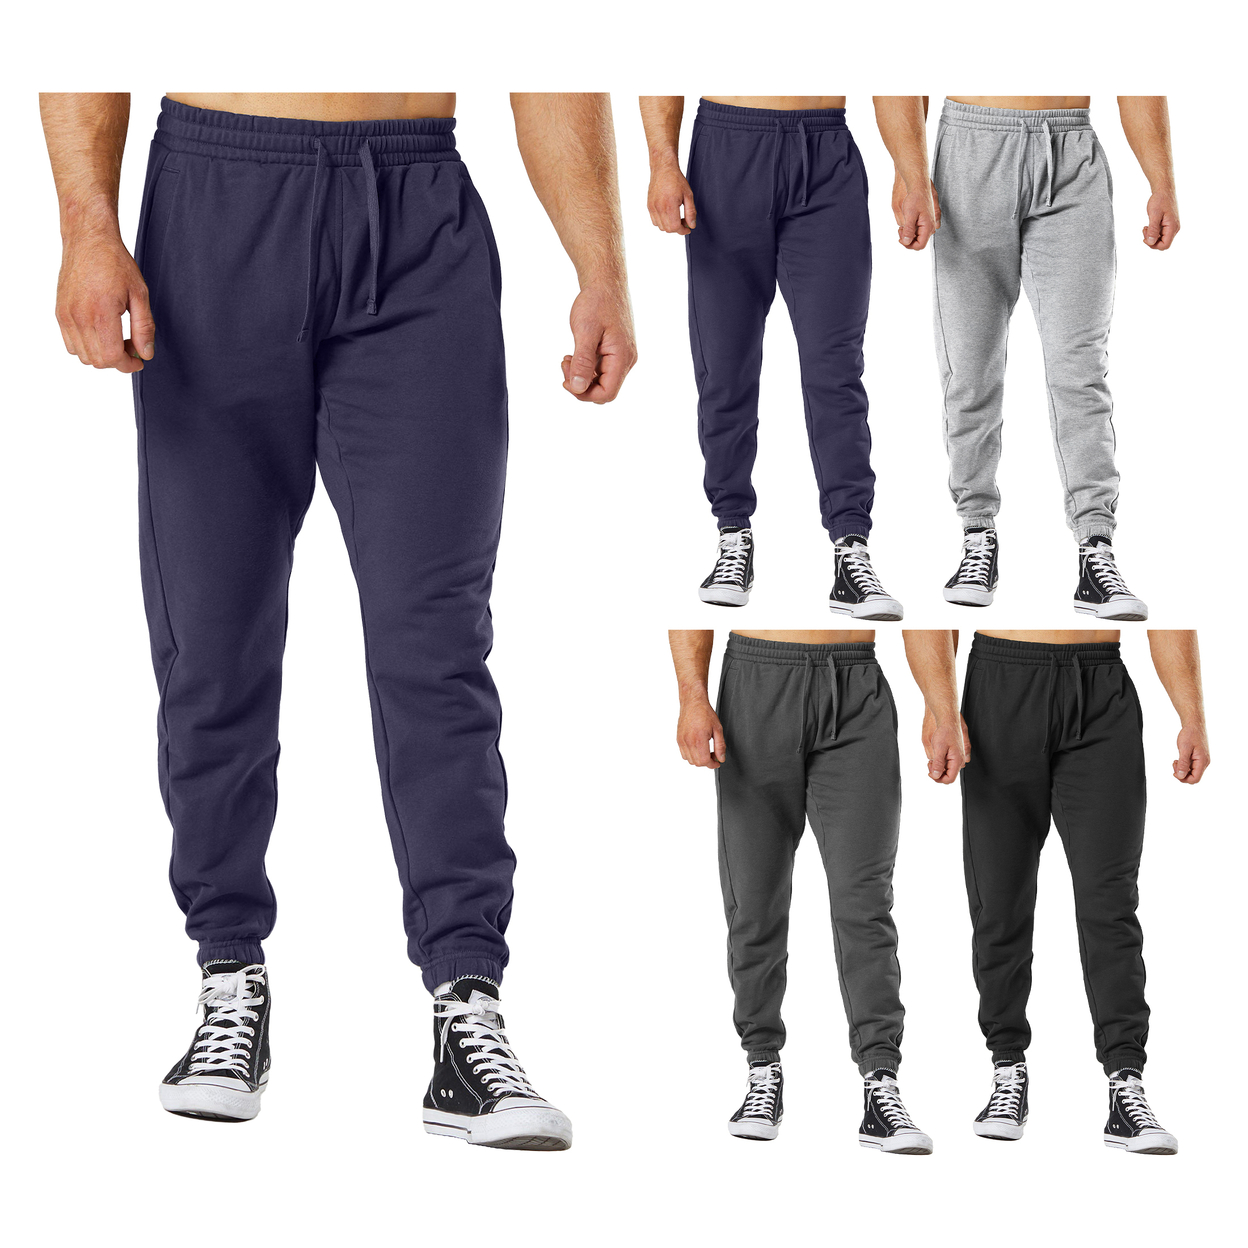 4-Pack: Men's Ultra-Soft Cozy Winter Warm Casual Fleece-Lined Sweatpants Jogger - Medium